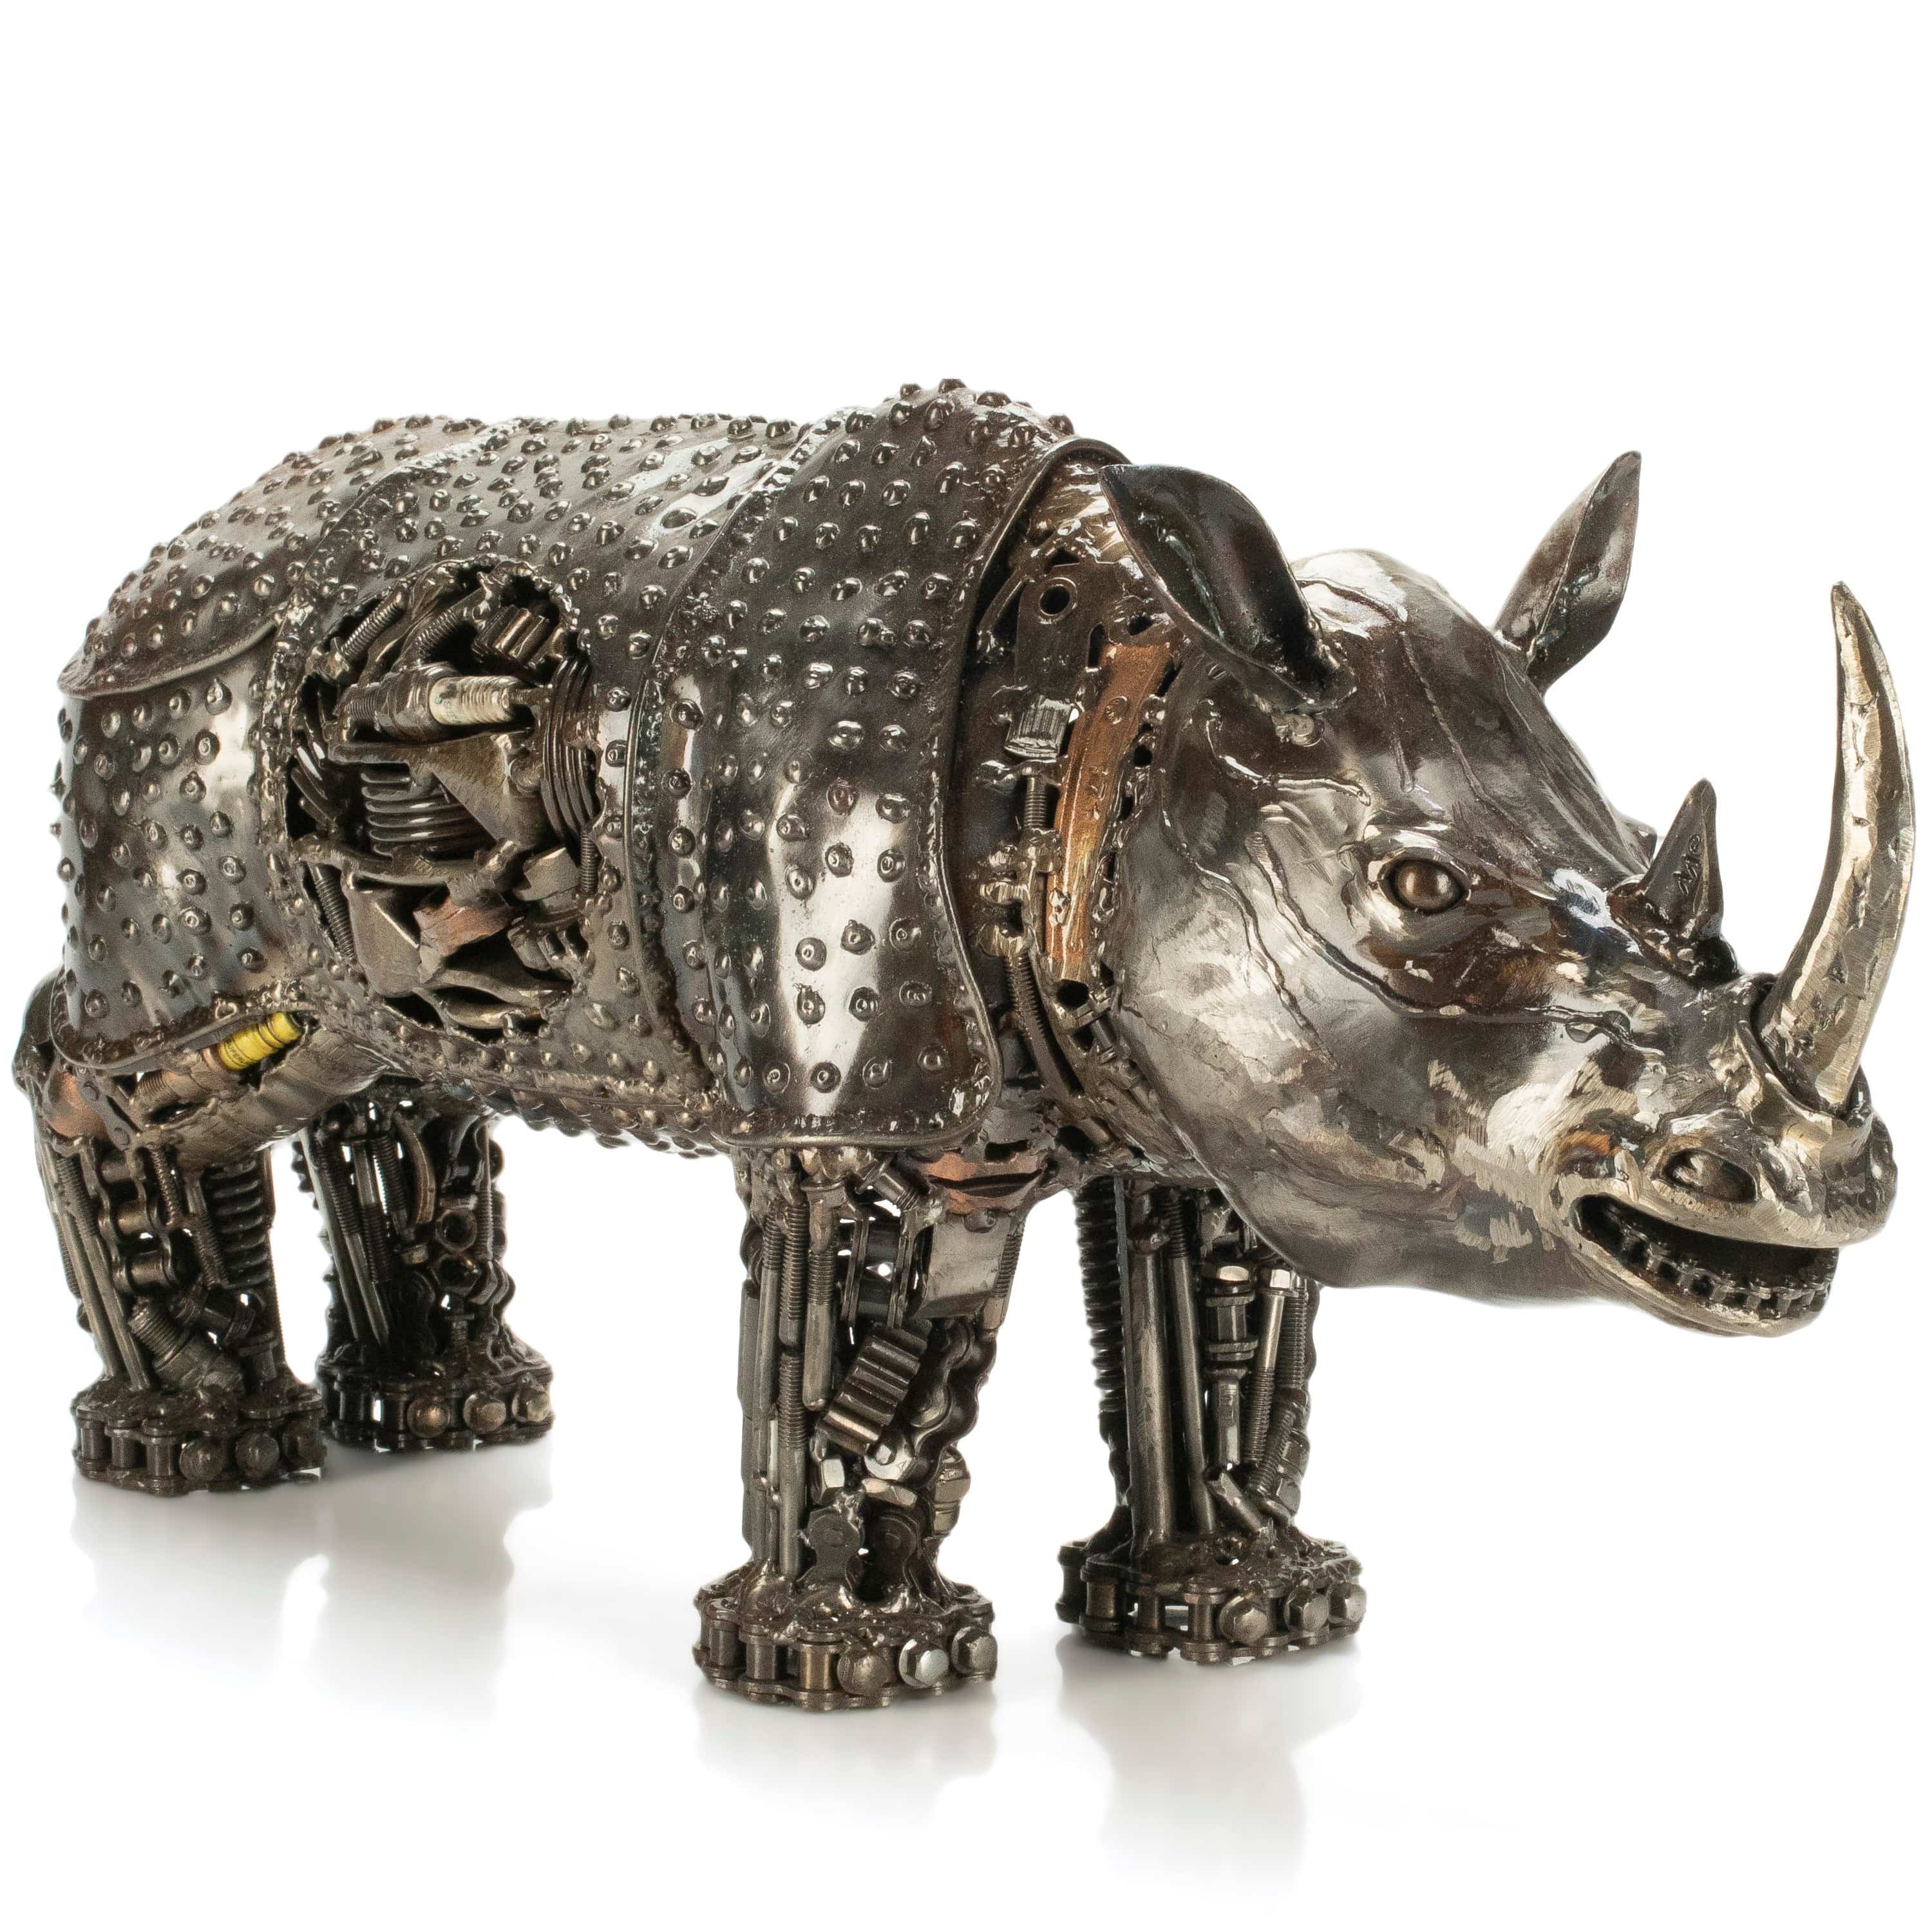 KALIFANO Recycled Metal Art Rhino Inspired Recycled Metal Art Sculpture RMS-4300RH-PK